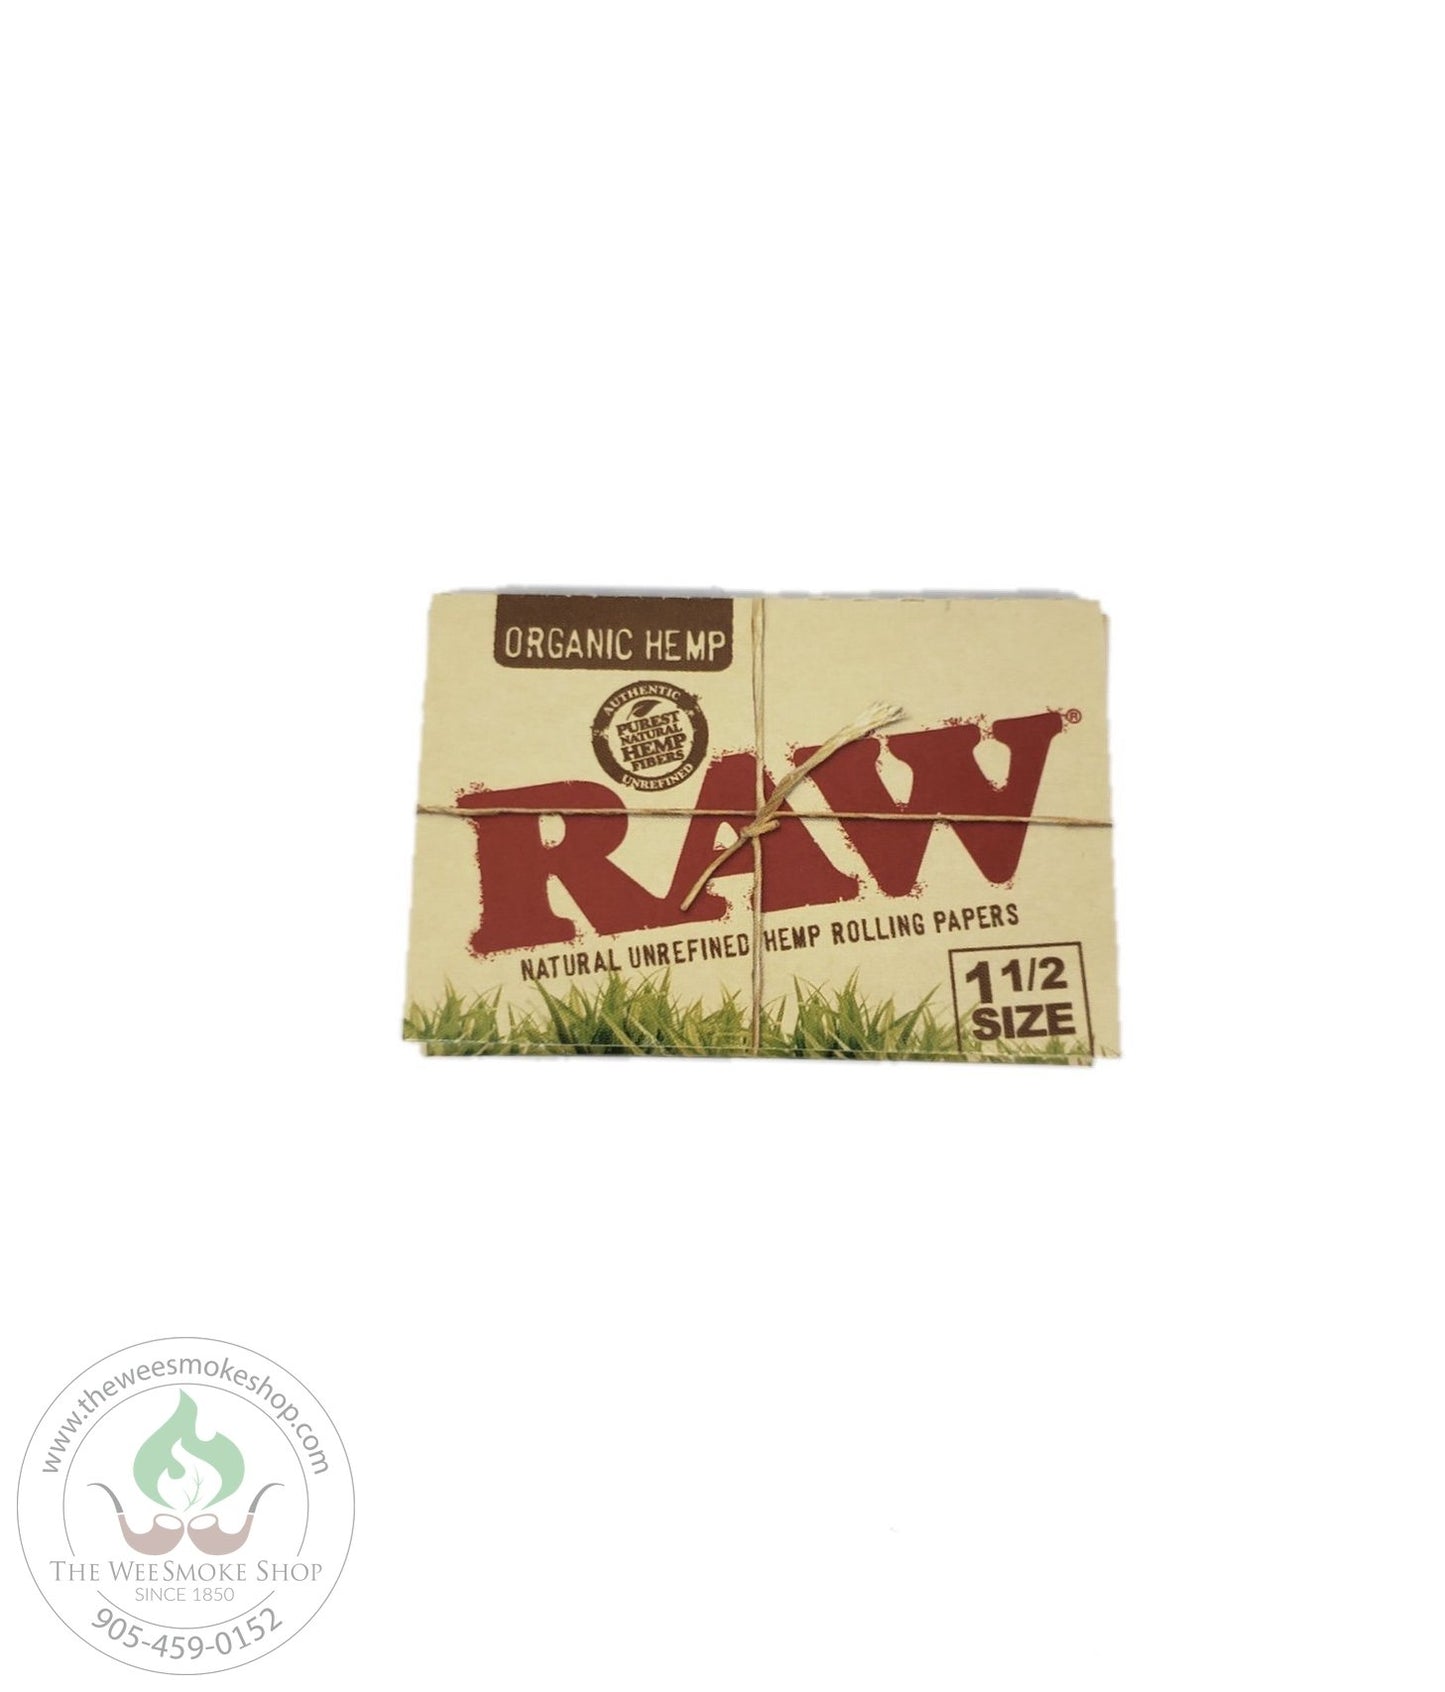 RAW Organic Hemp Rolling Papers. size 1 1/2.